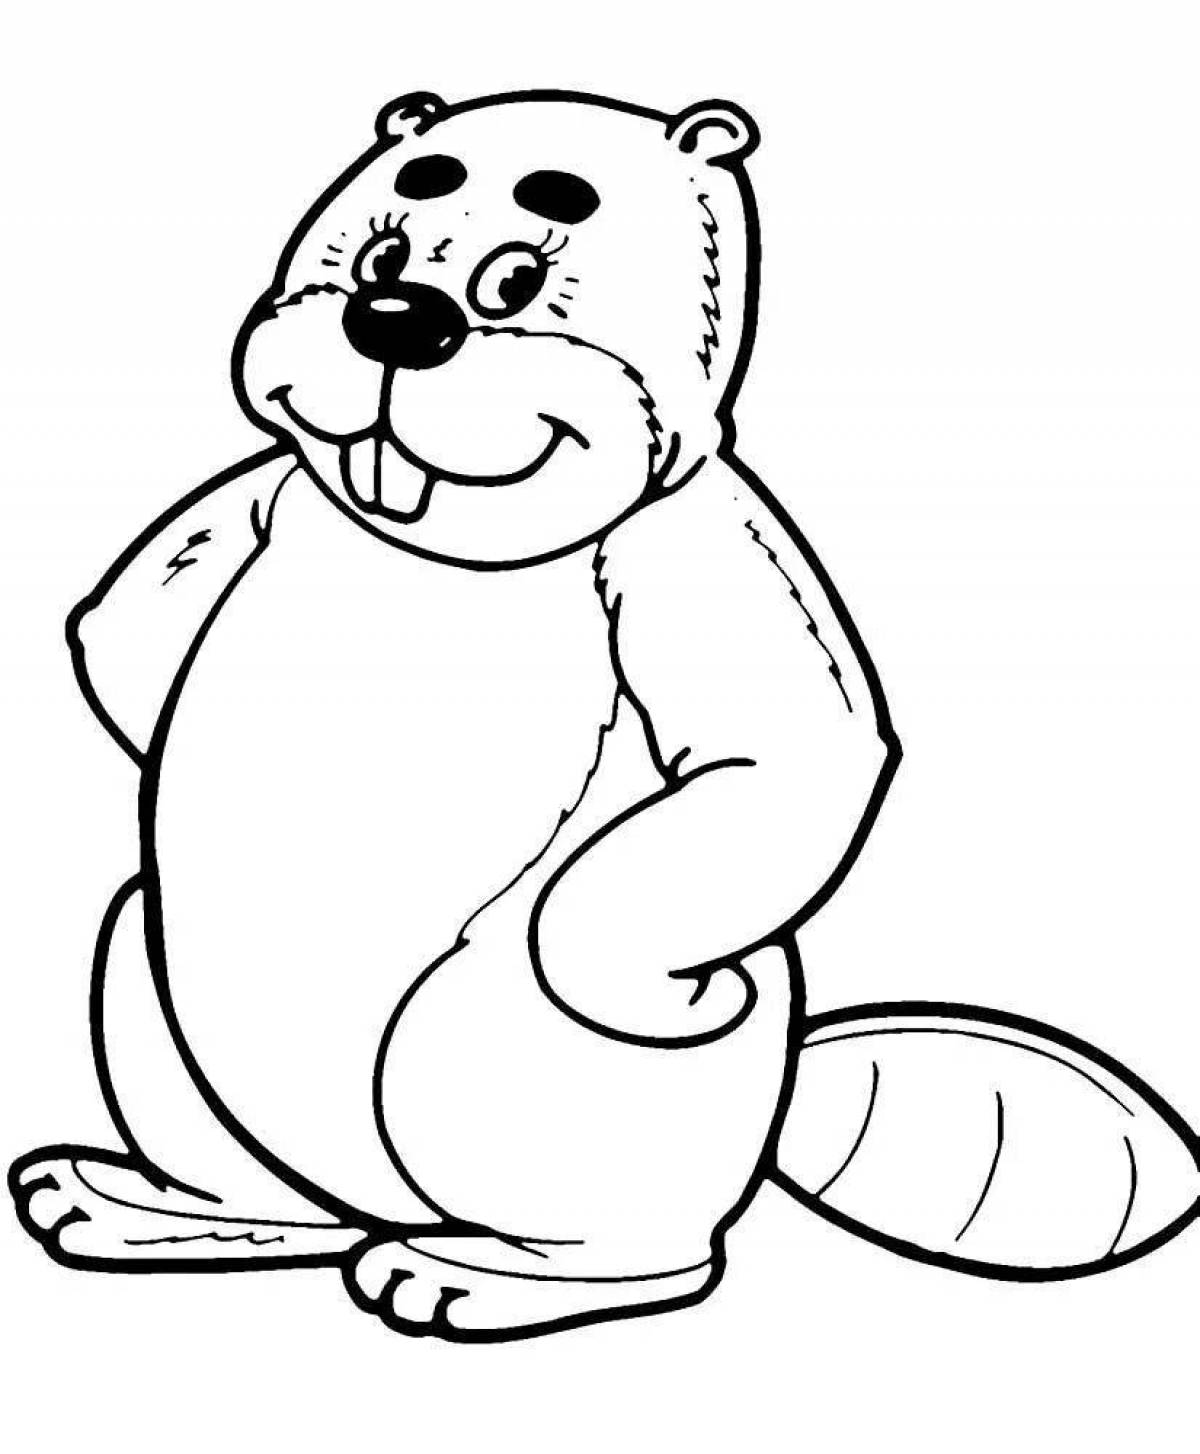 Cute beaver coloring book for kids